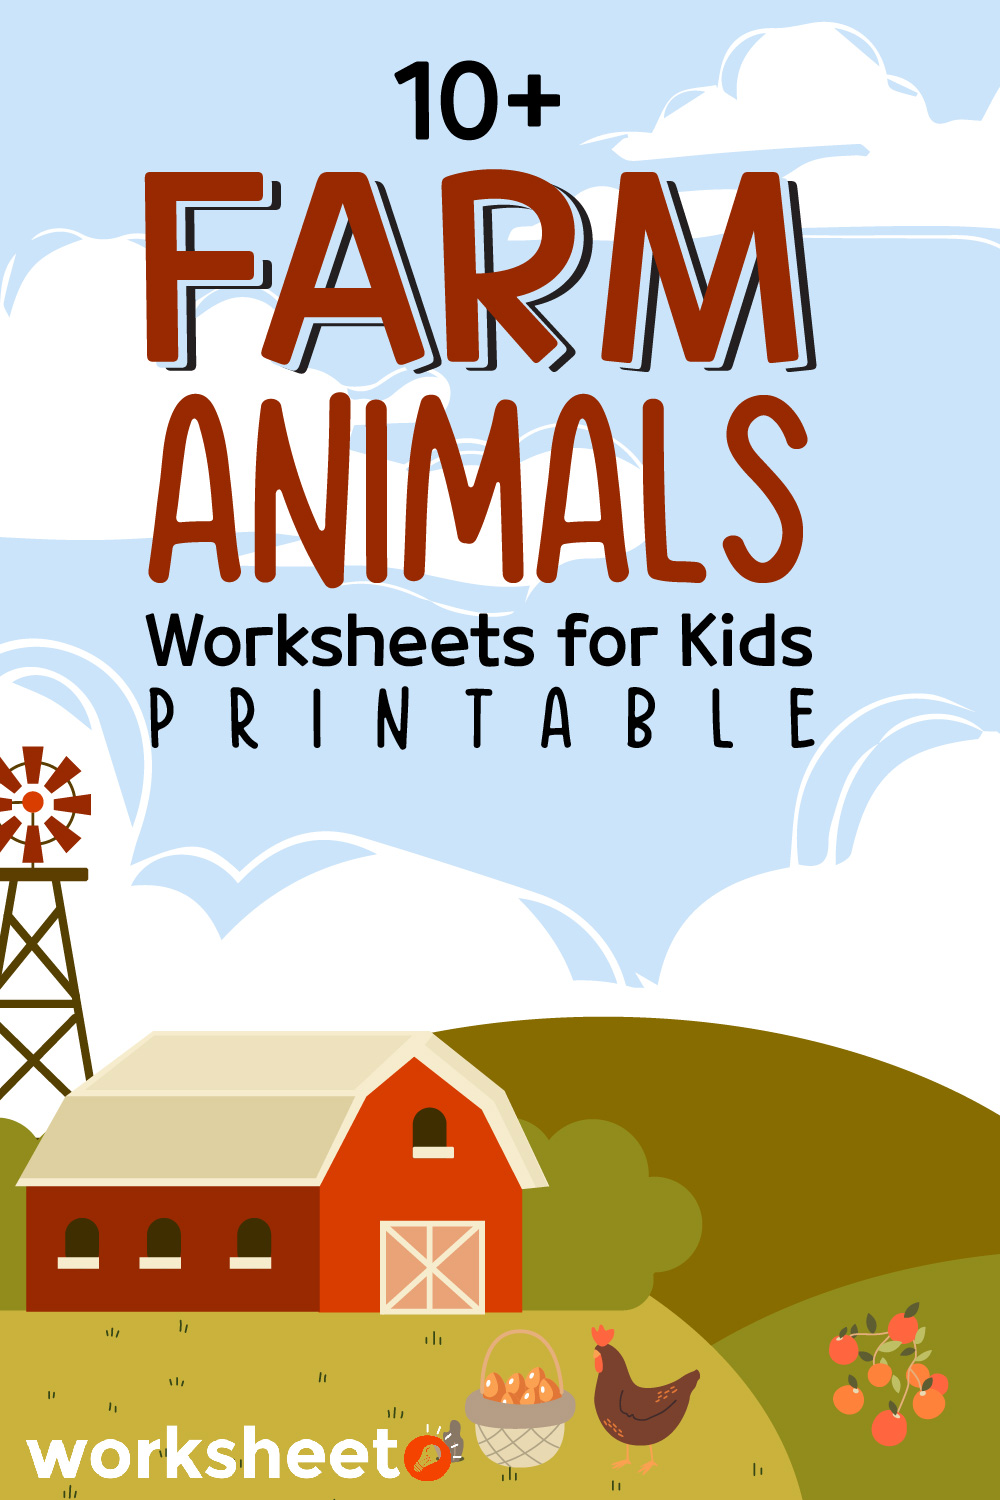 Farm Animals Worksheets for Kids Printable